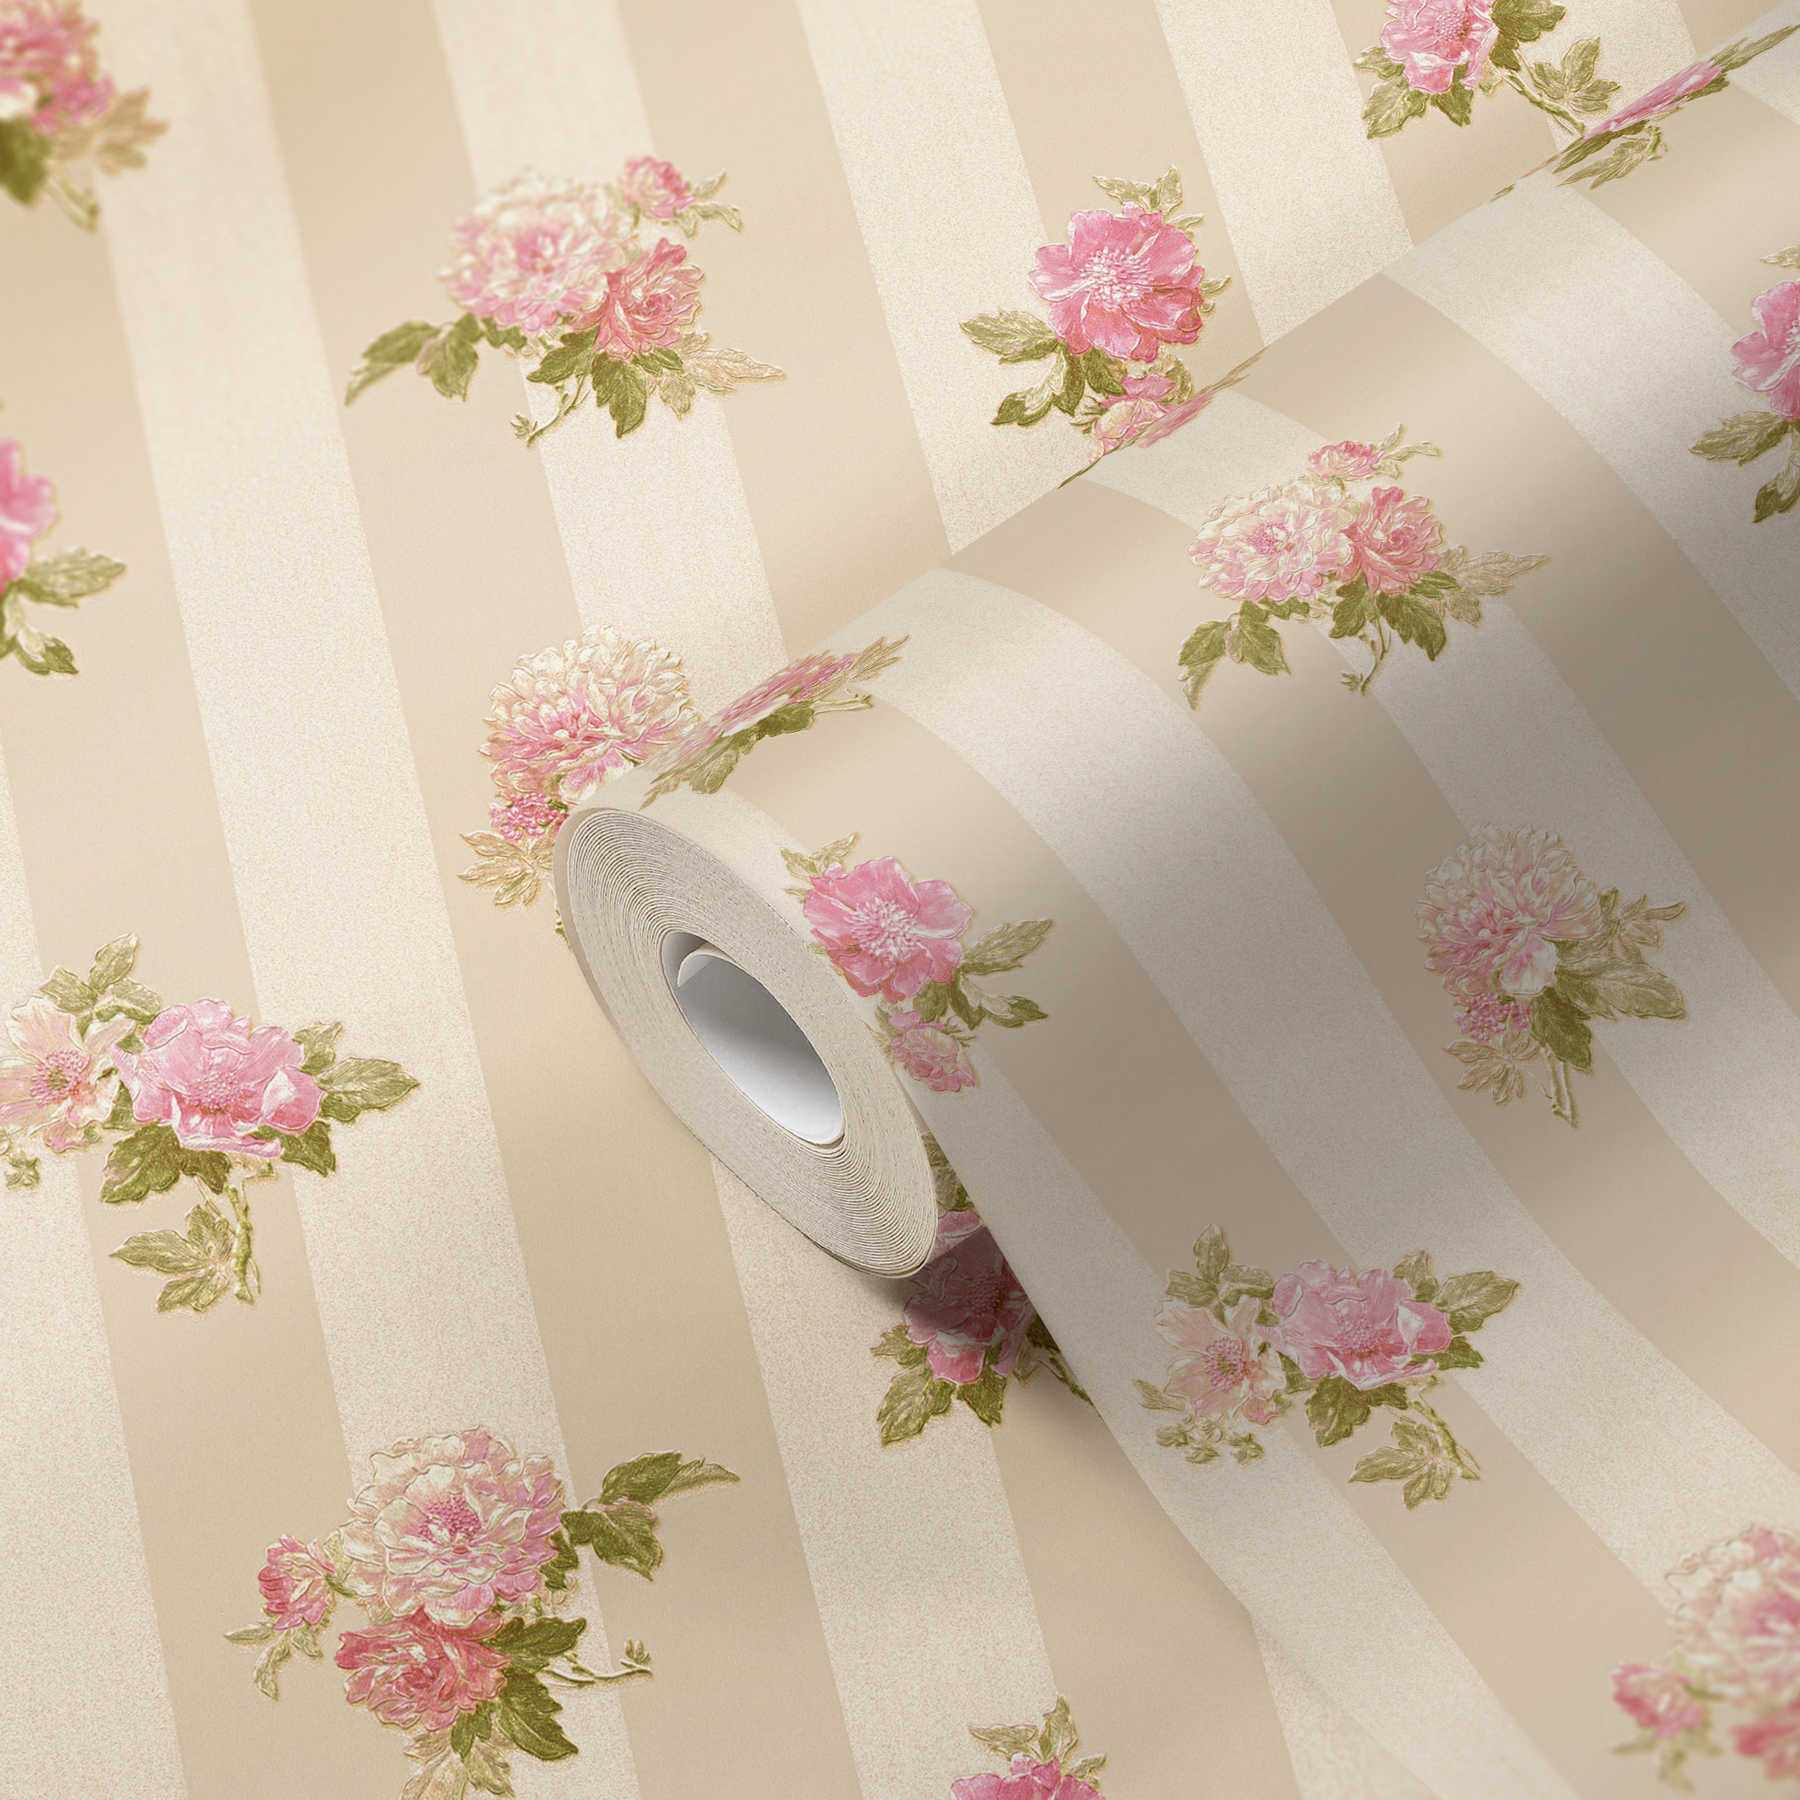             Non-woven wallpaper rose pattern & stripe design - cream, green, pink
        